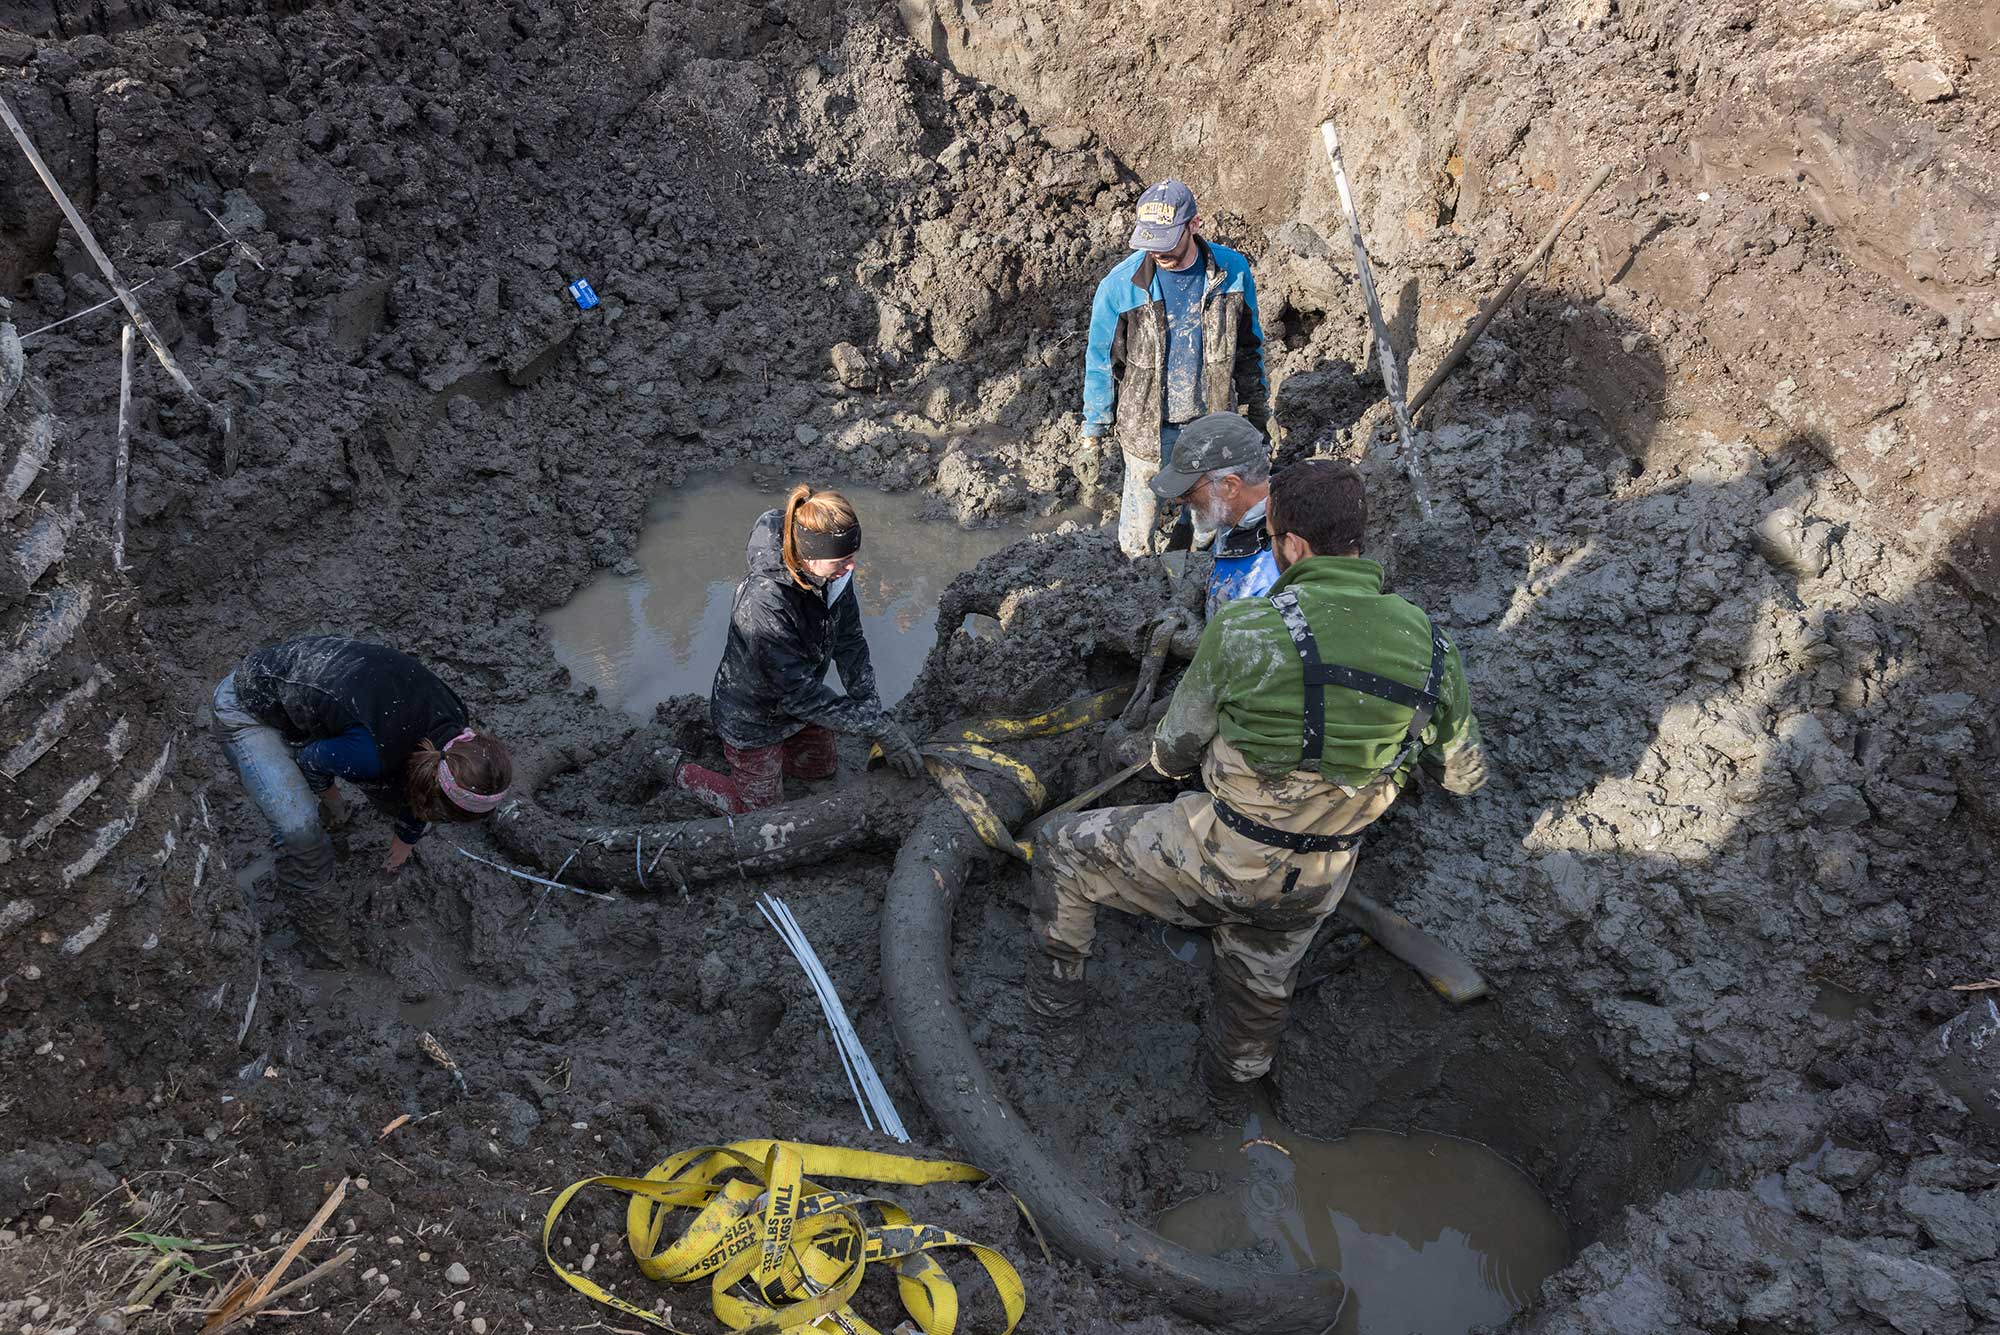 A Michigan Farmer Found a Near-Complete Mammoth Skeleton in His Field
